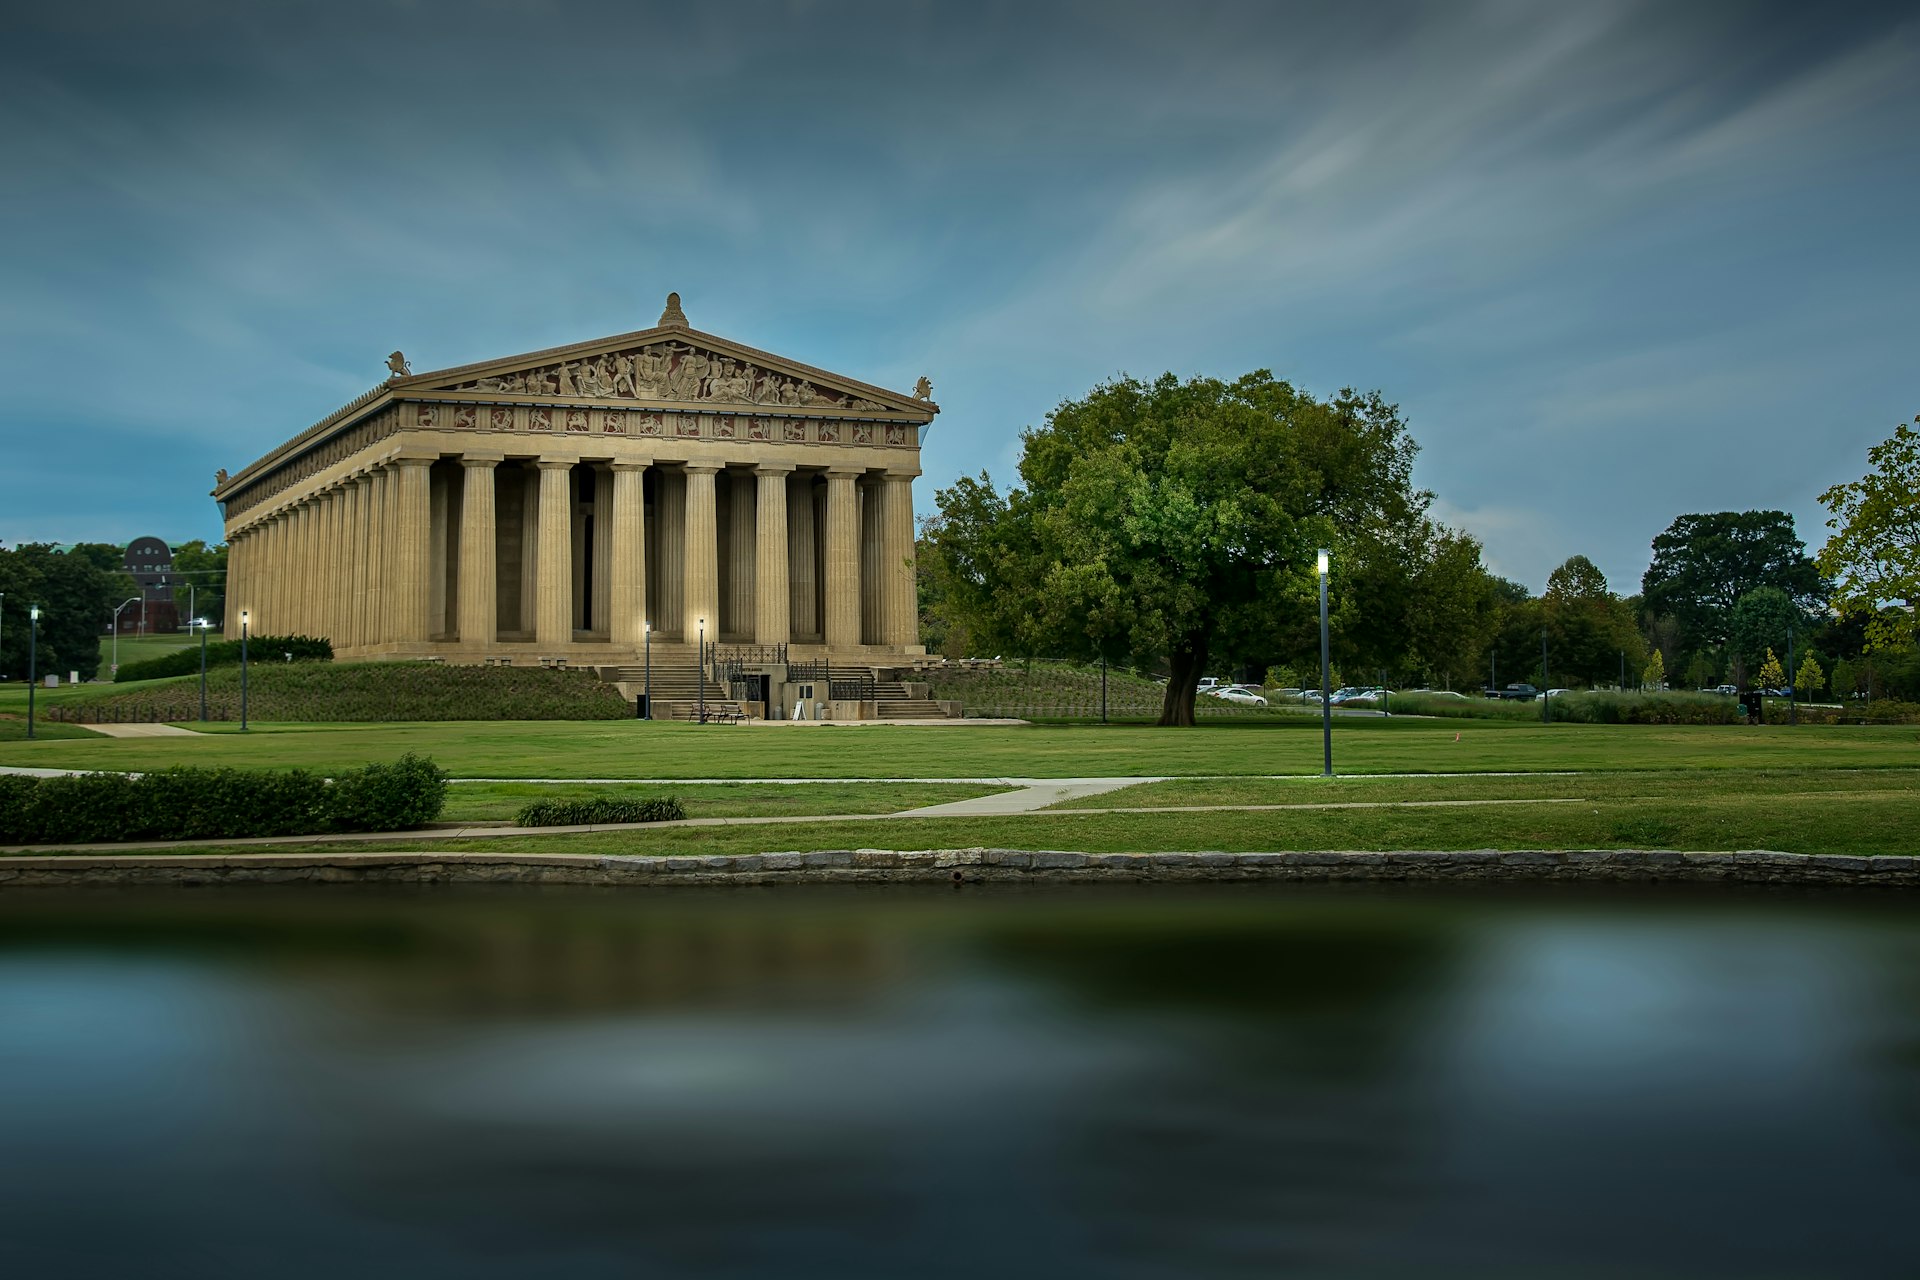 500px Photo ID: 128670221 - Exact replica of the Parthenon in Nashville, TN